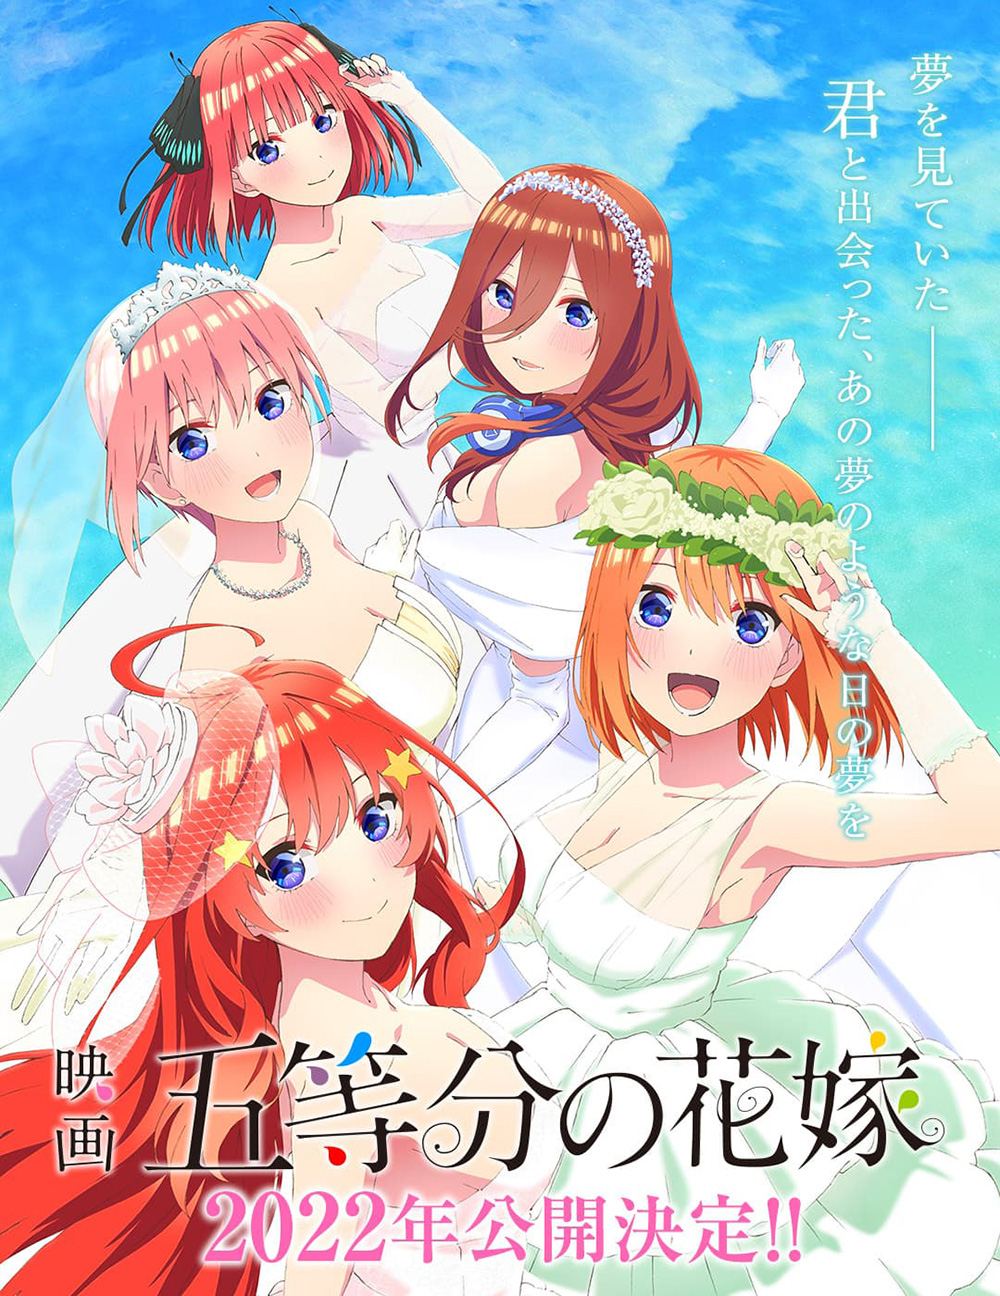 5Toubun-no-Hanayome-Anime-Movie-Announcement-Image